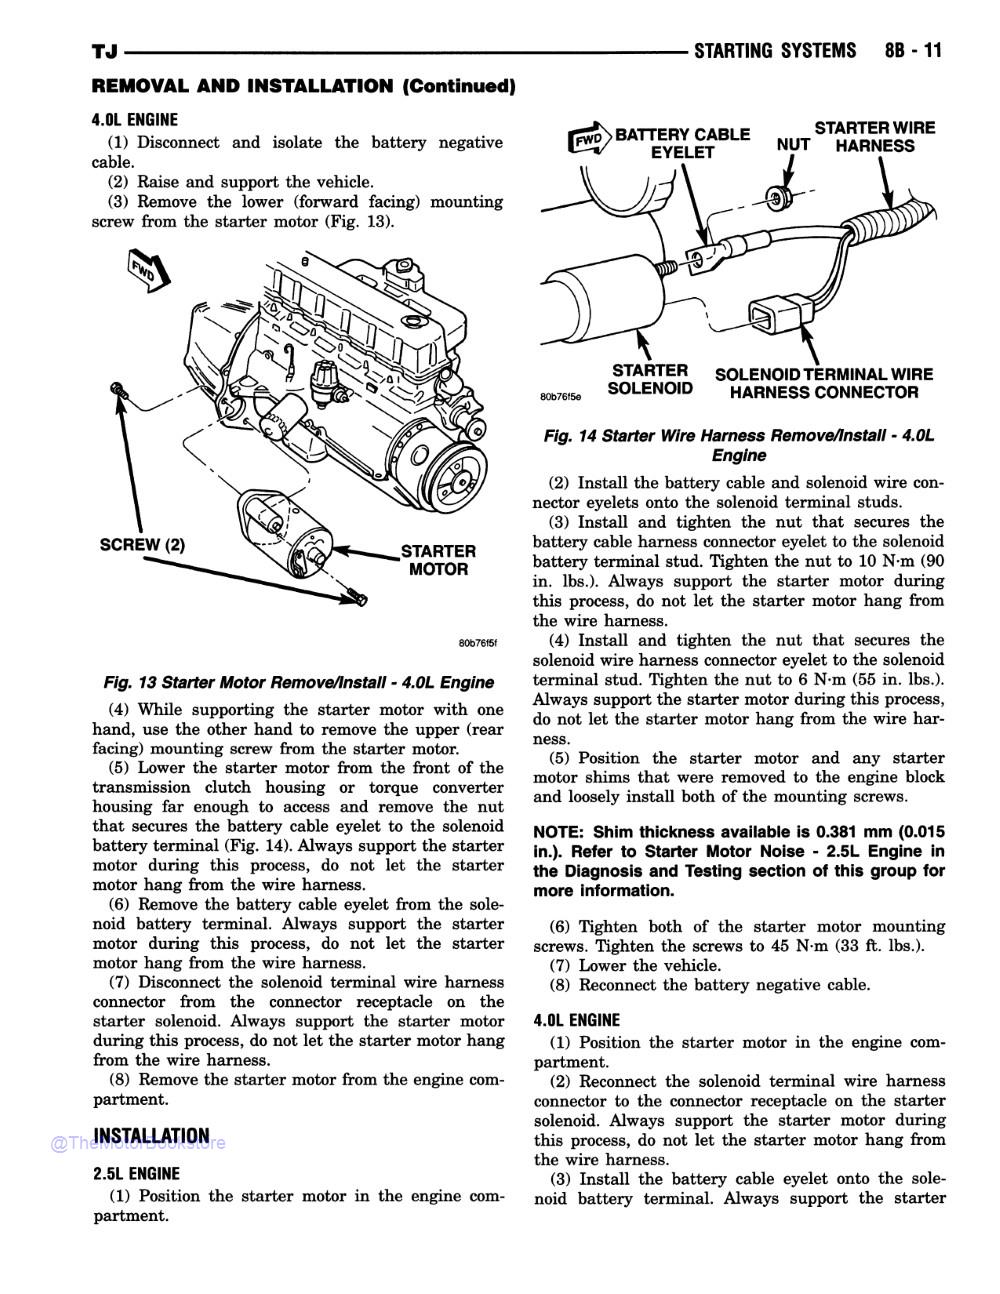 1999 Jeep Wrangler Shop Manual - Sample Page 1